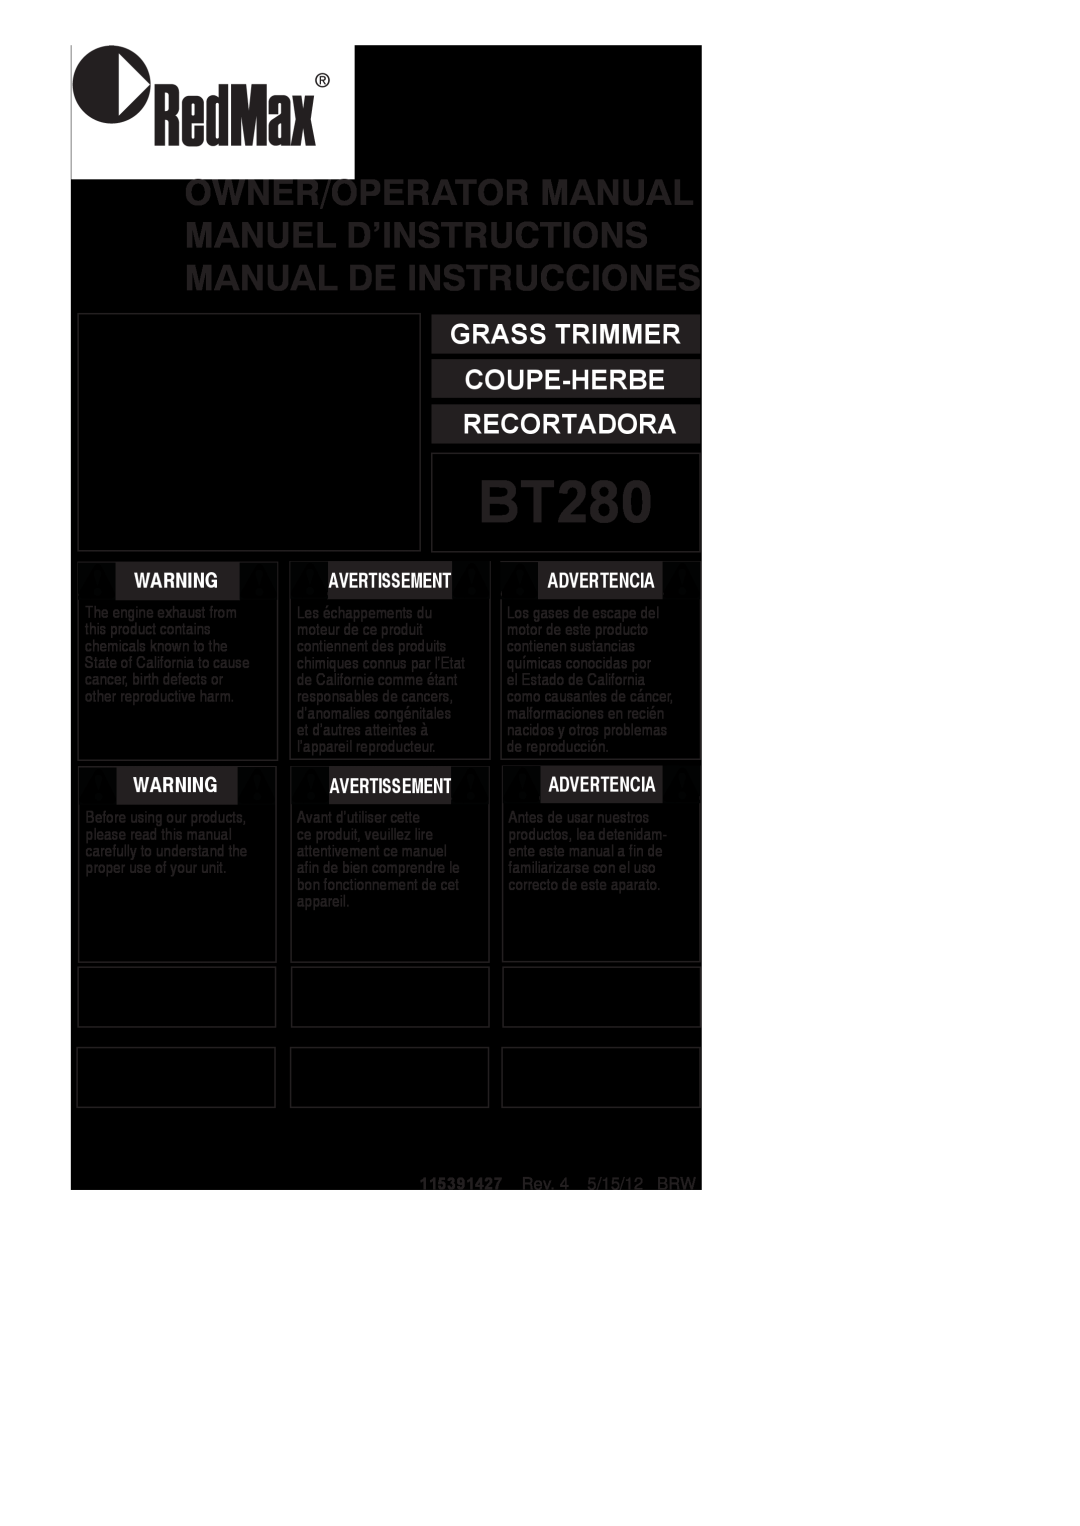 RedMax BT280 manual Grass Trimmer Coupe-Herbe Recortadora, Avertissement, Advertencia, 115391427 Rev. 4 5/15/12 BRW 